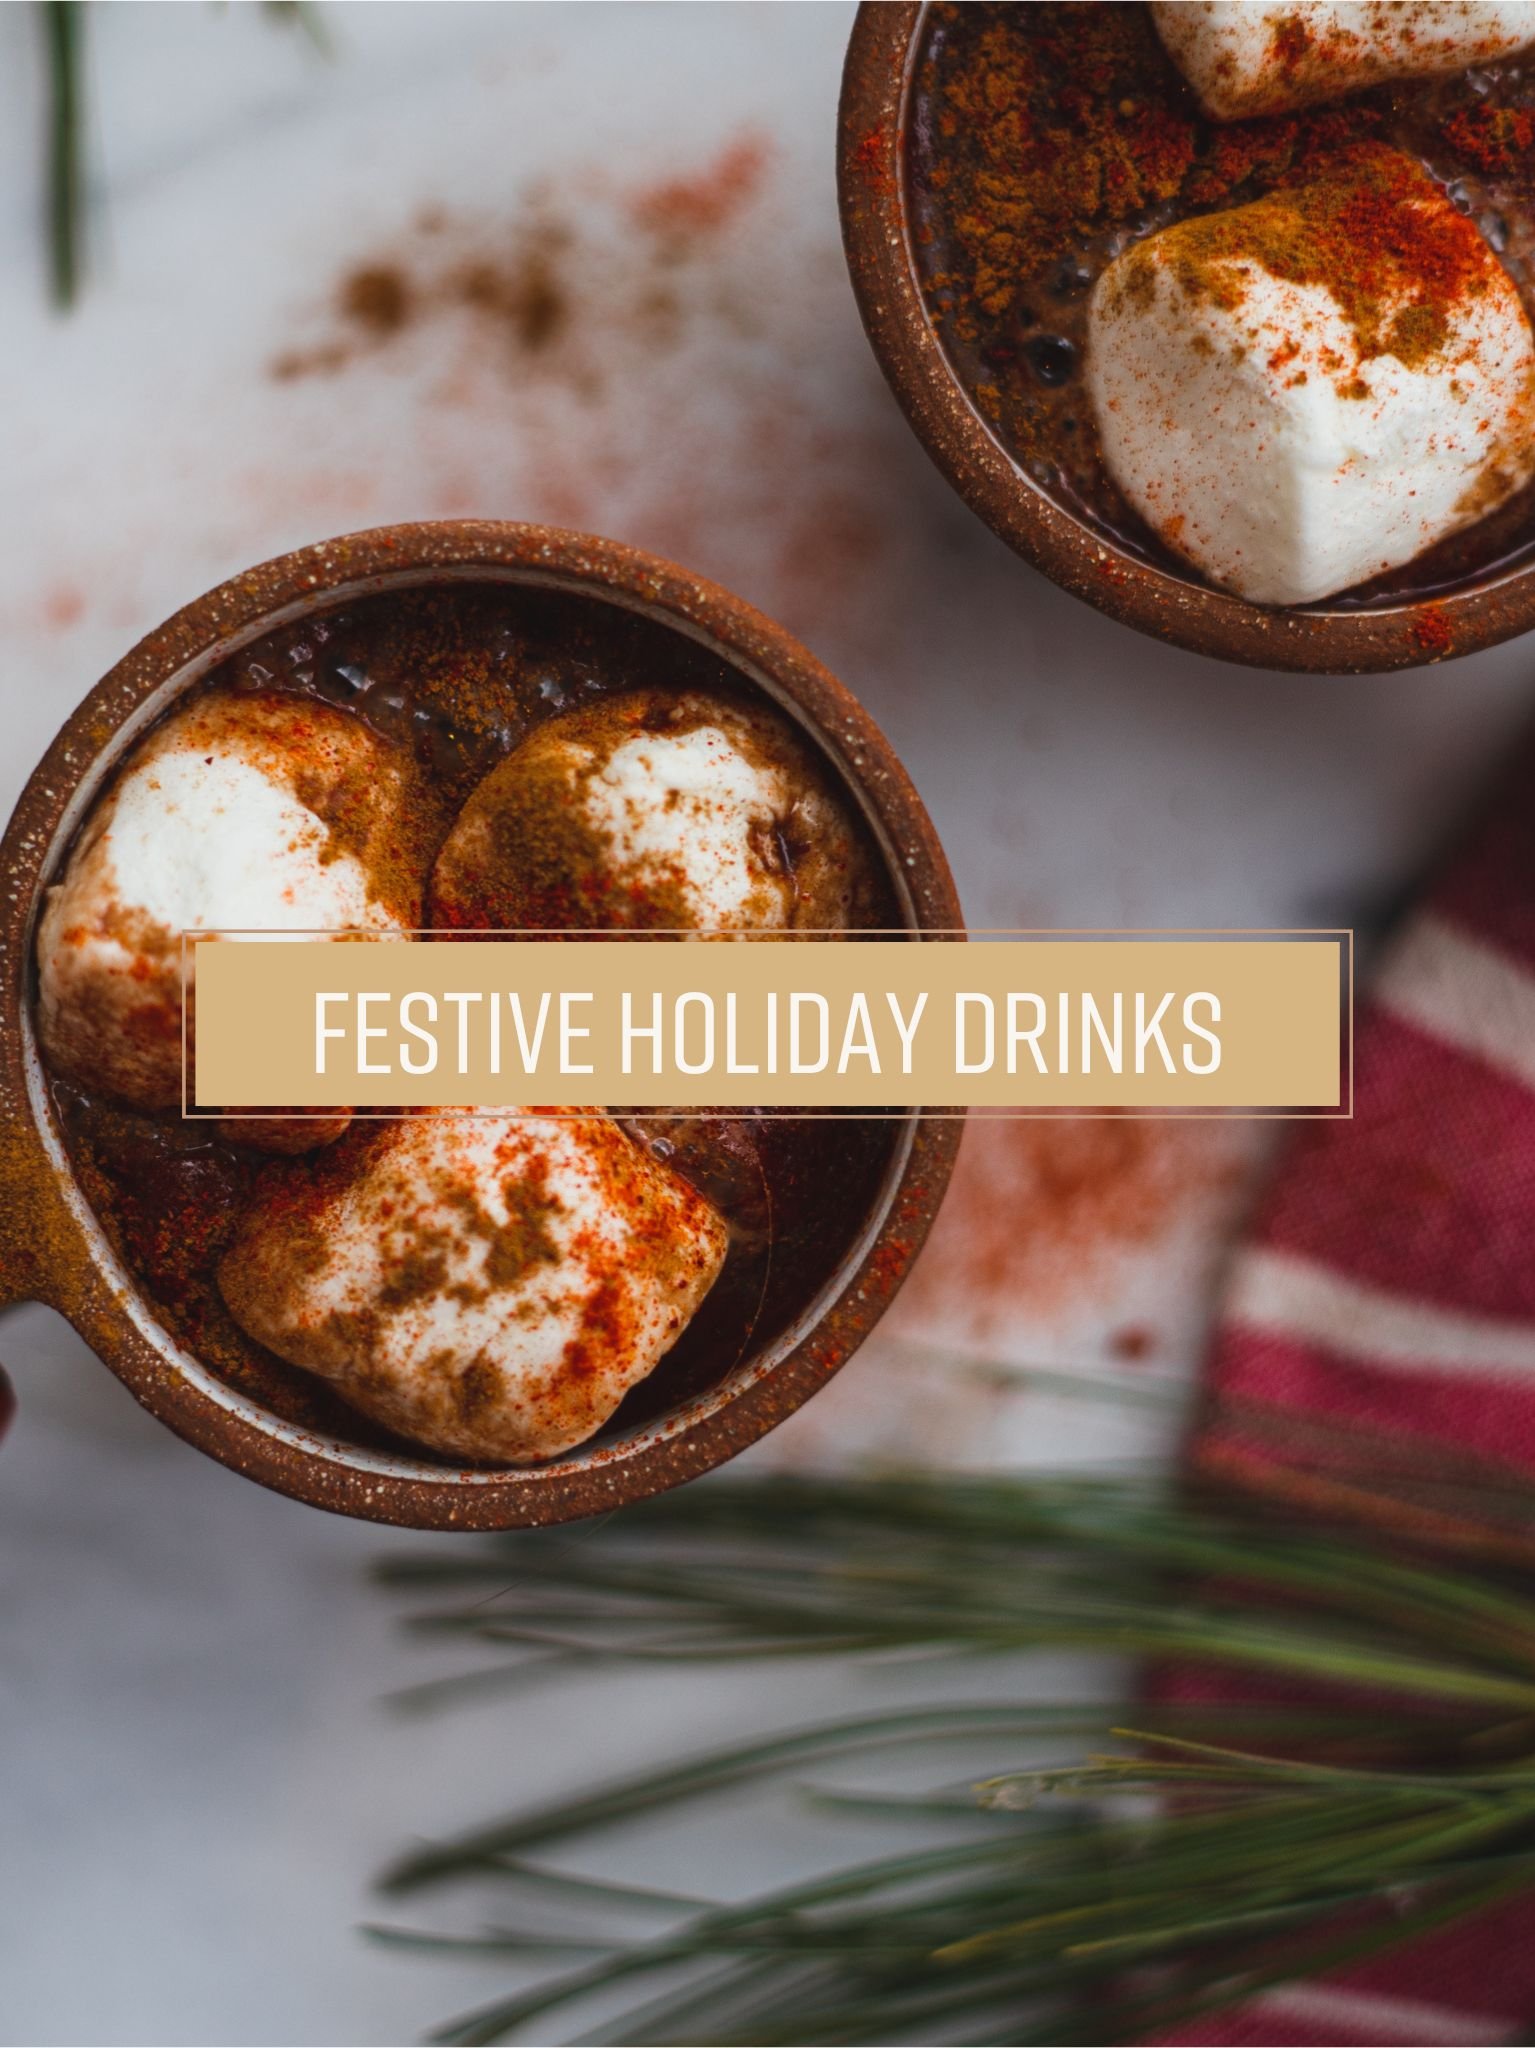 Desert Provisions Festive Holiday Drinks